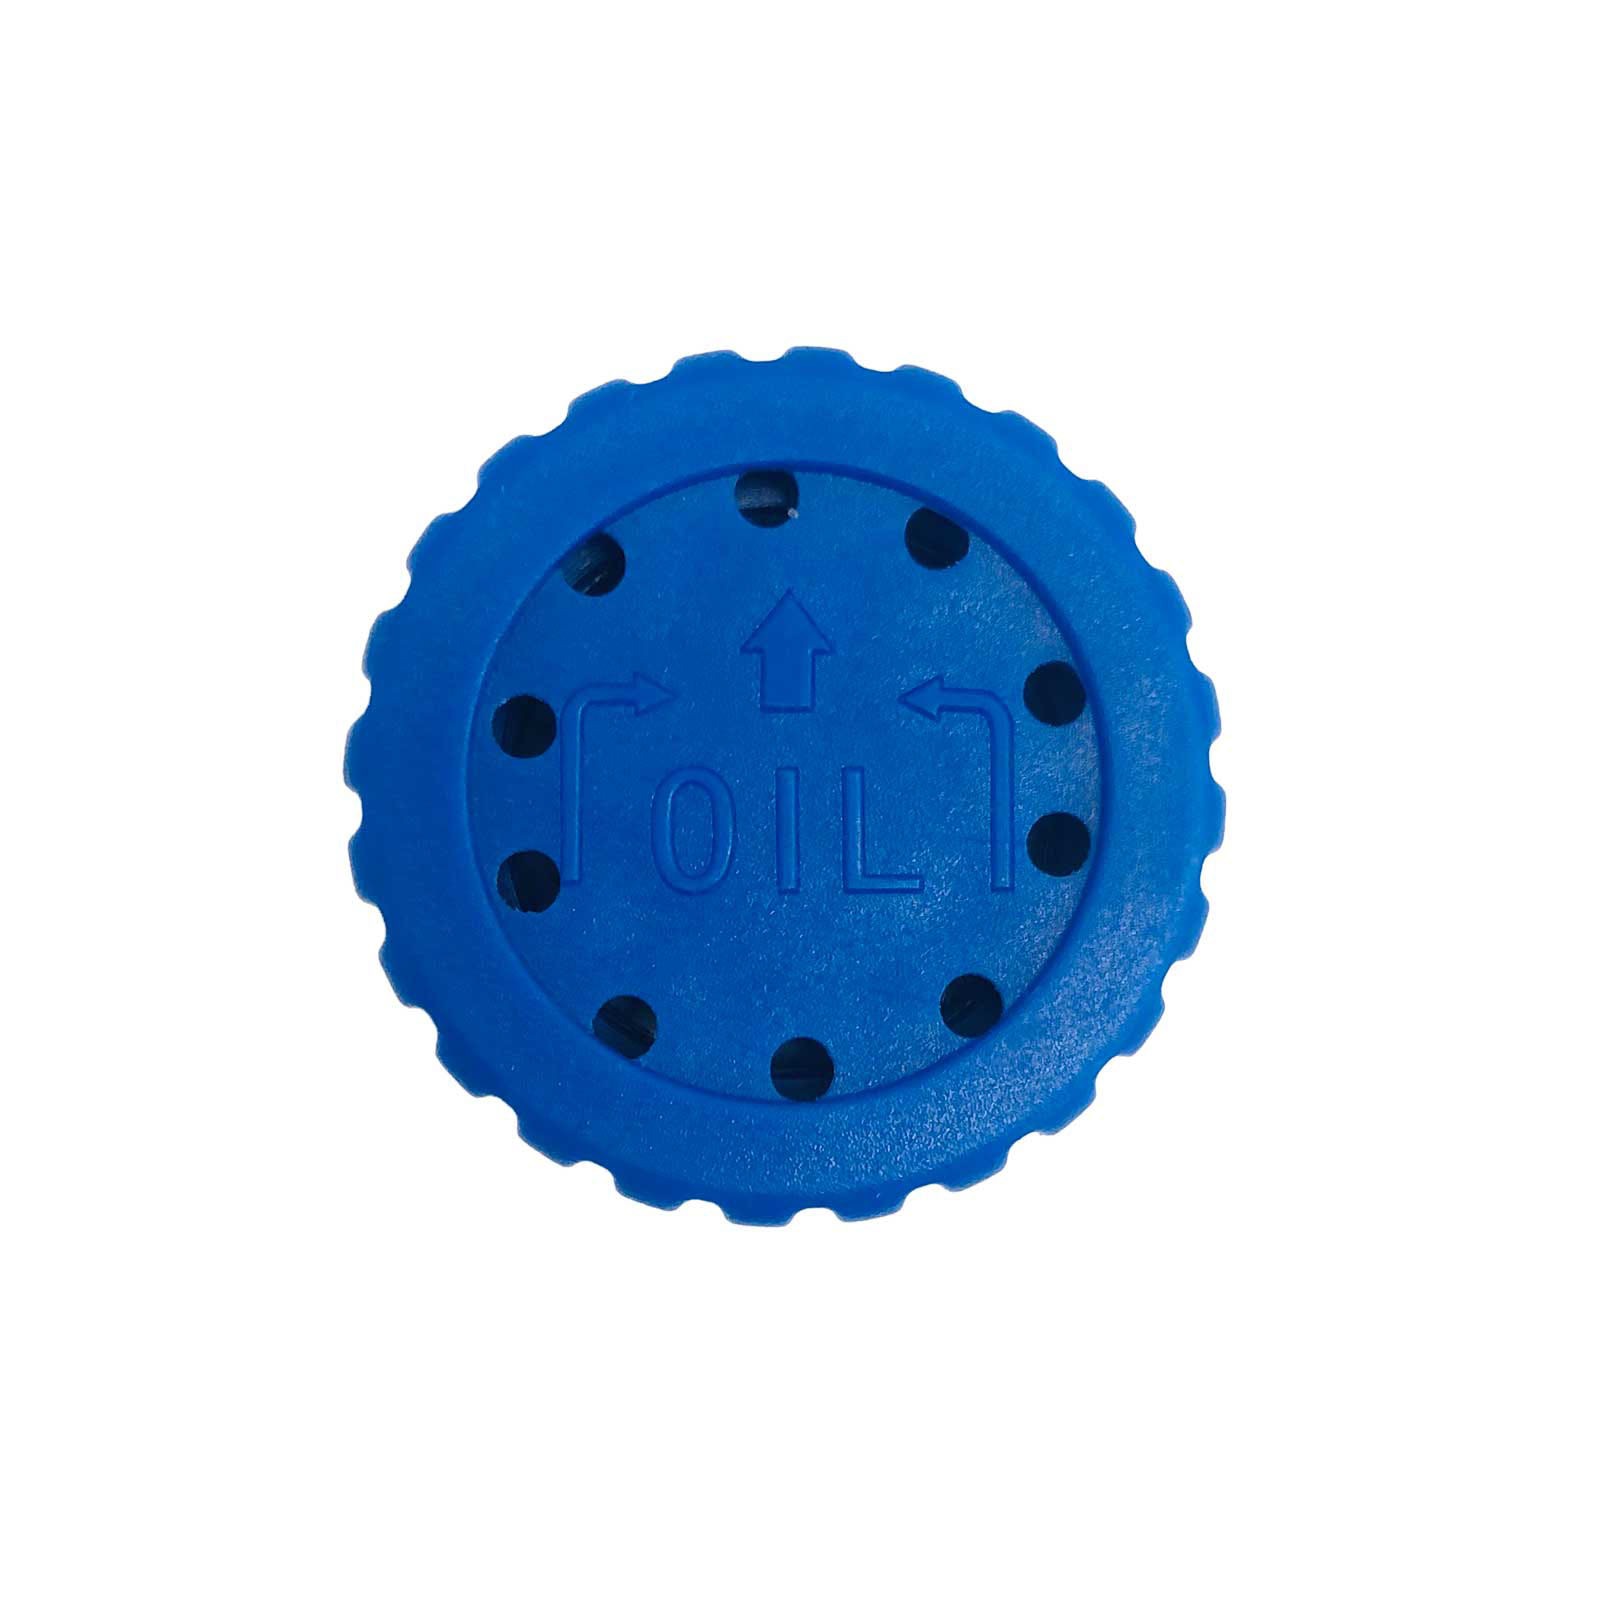 Blue Plastic Oil Filter Cap for 3 CFM Vac Pump